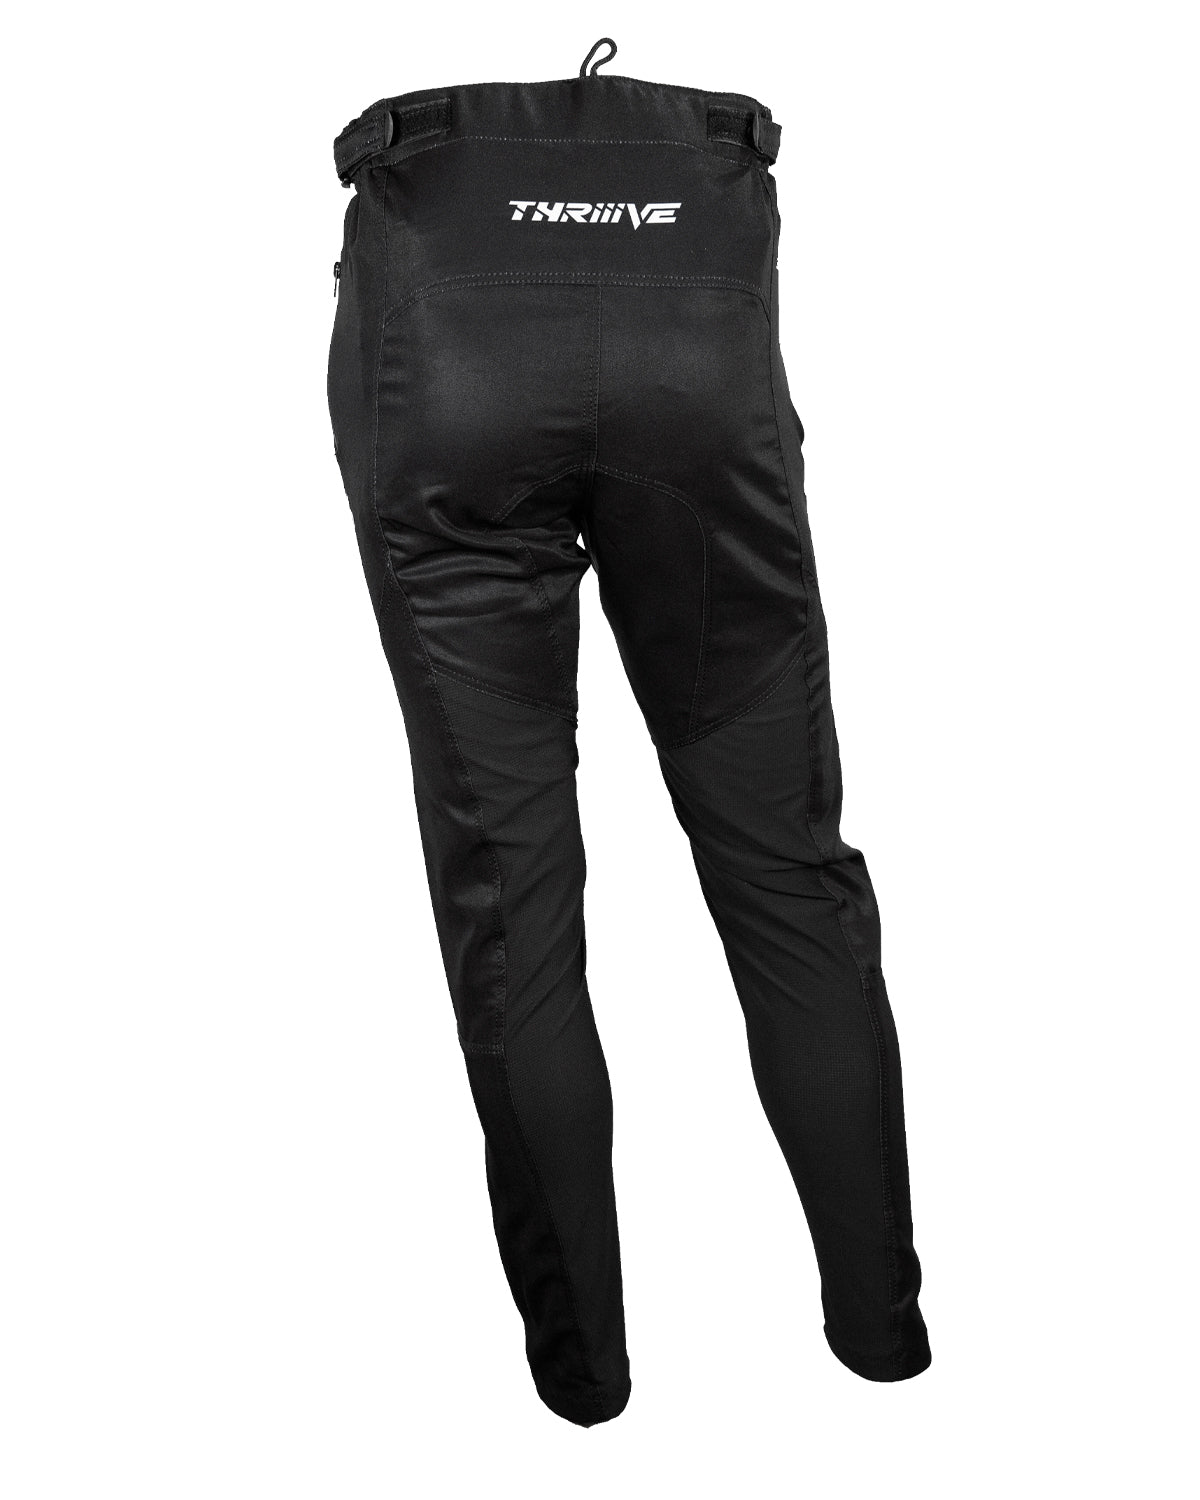 Elite Stretch Race Pants - Black